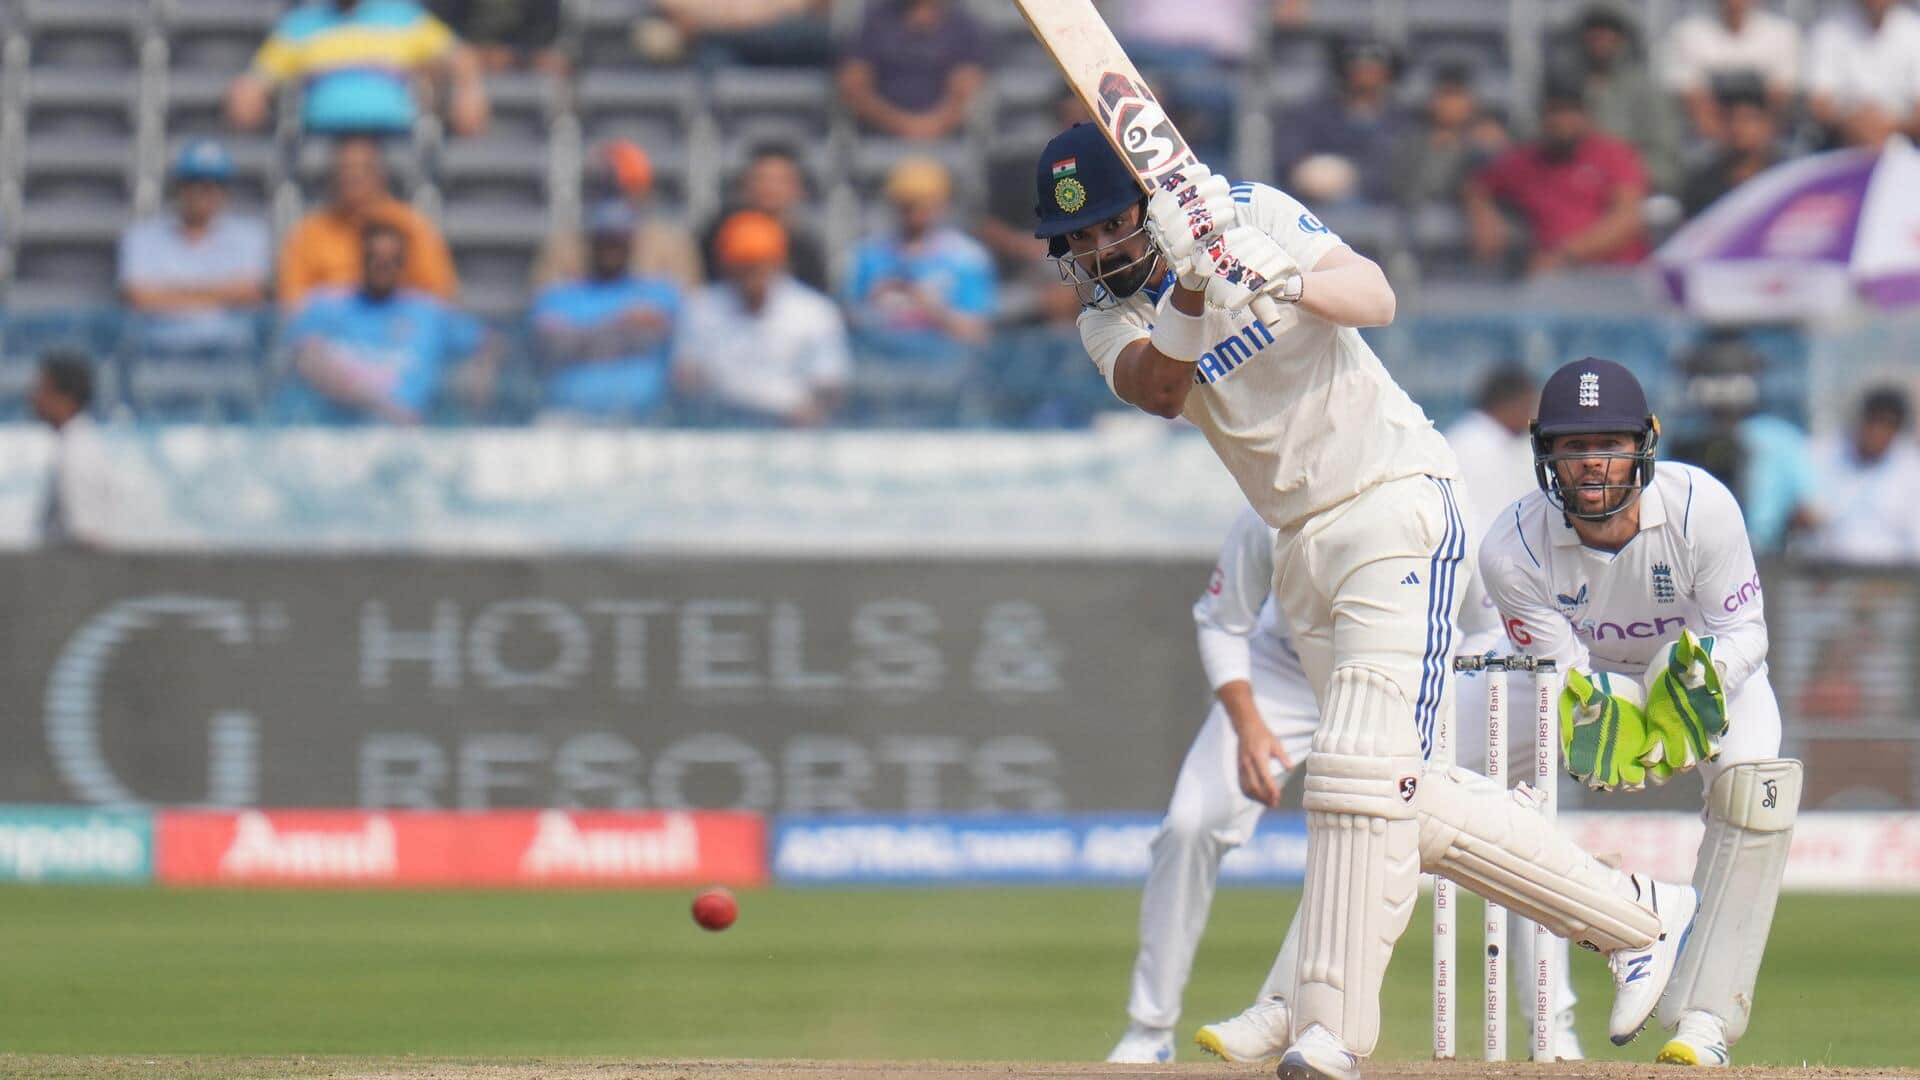 KL Rahul slams his fifth 50-plus Test score against England